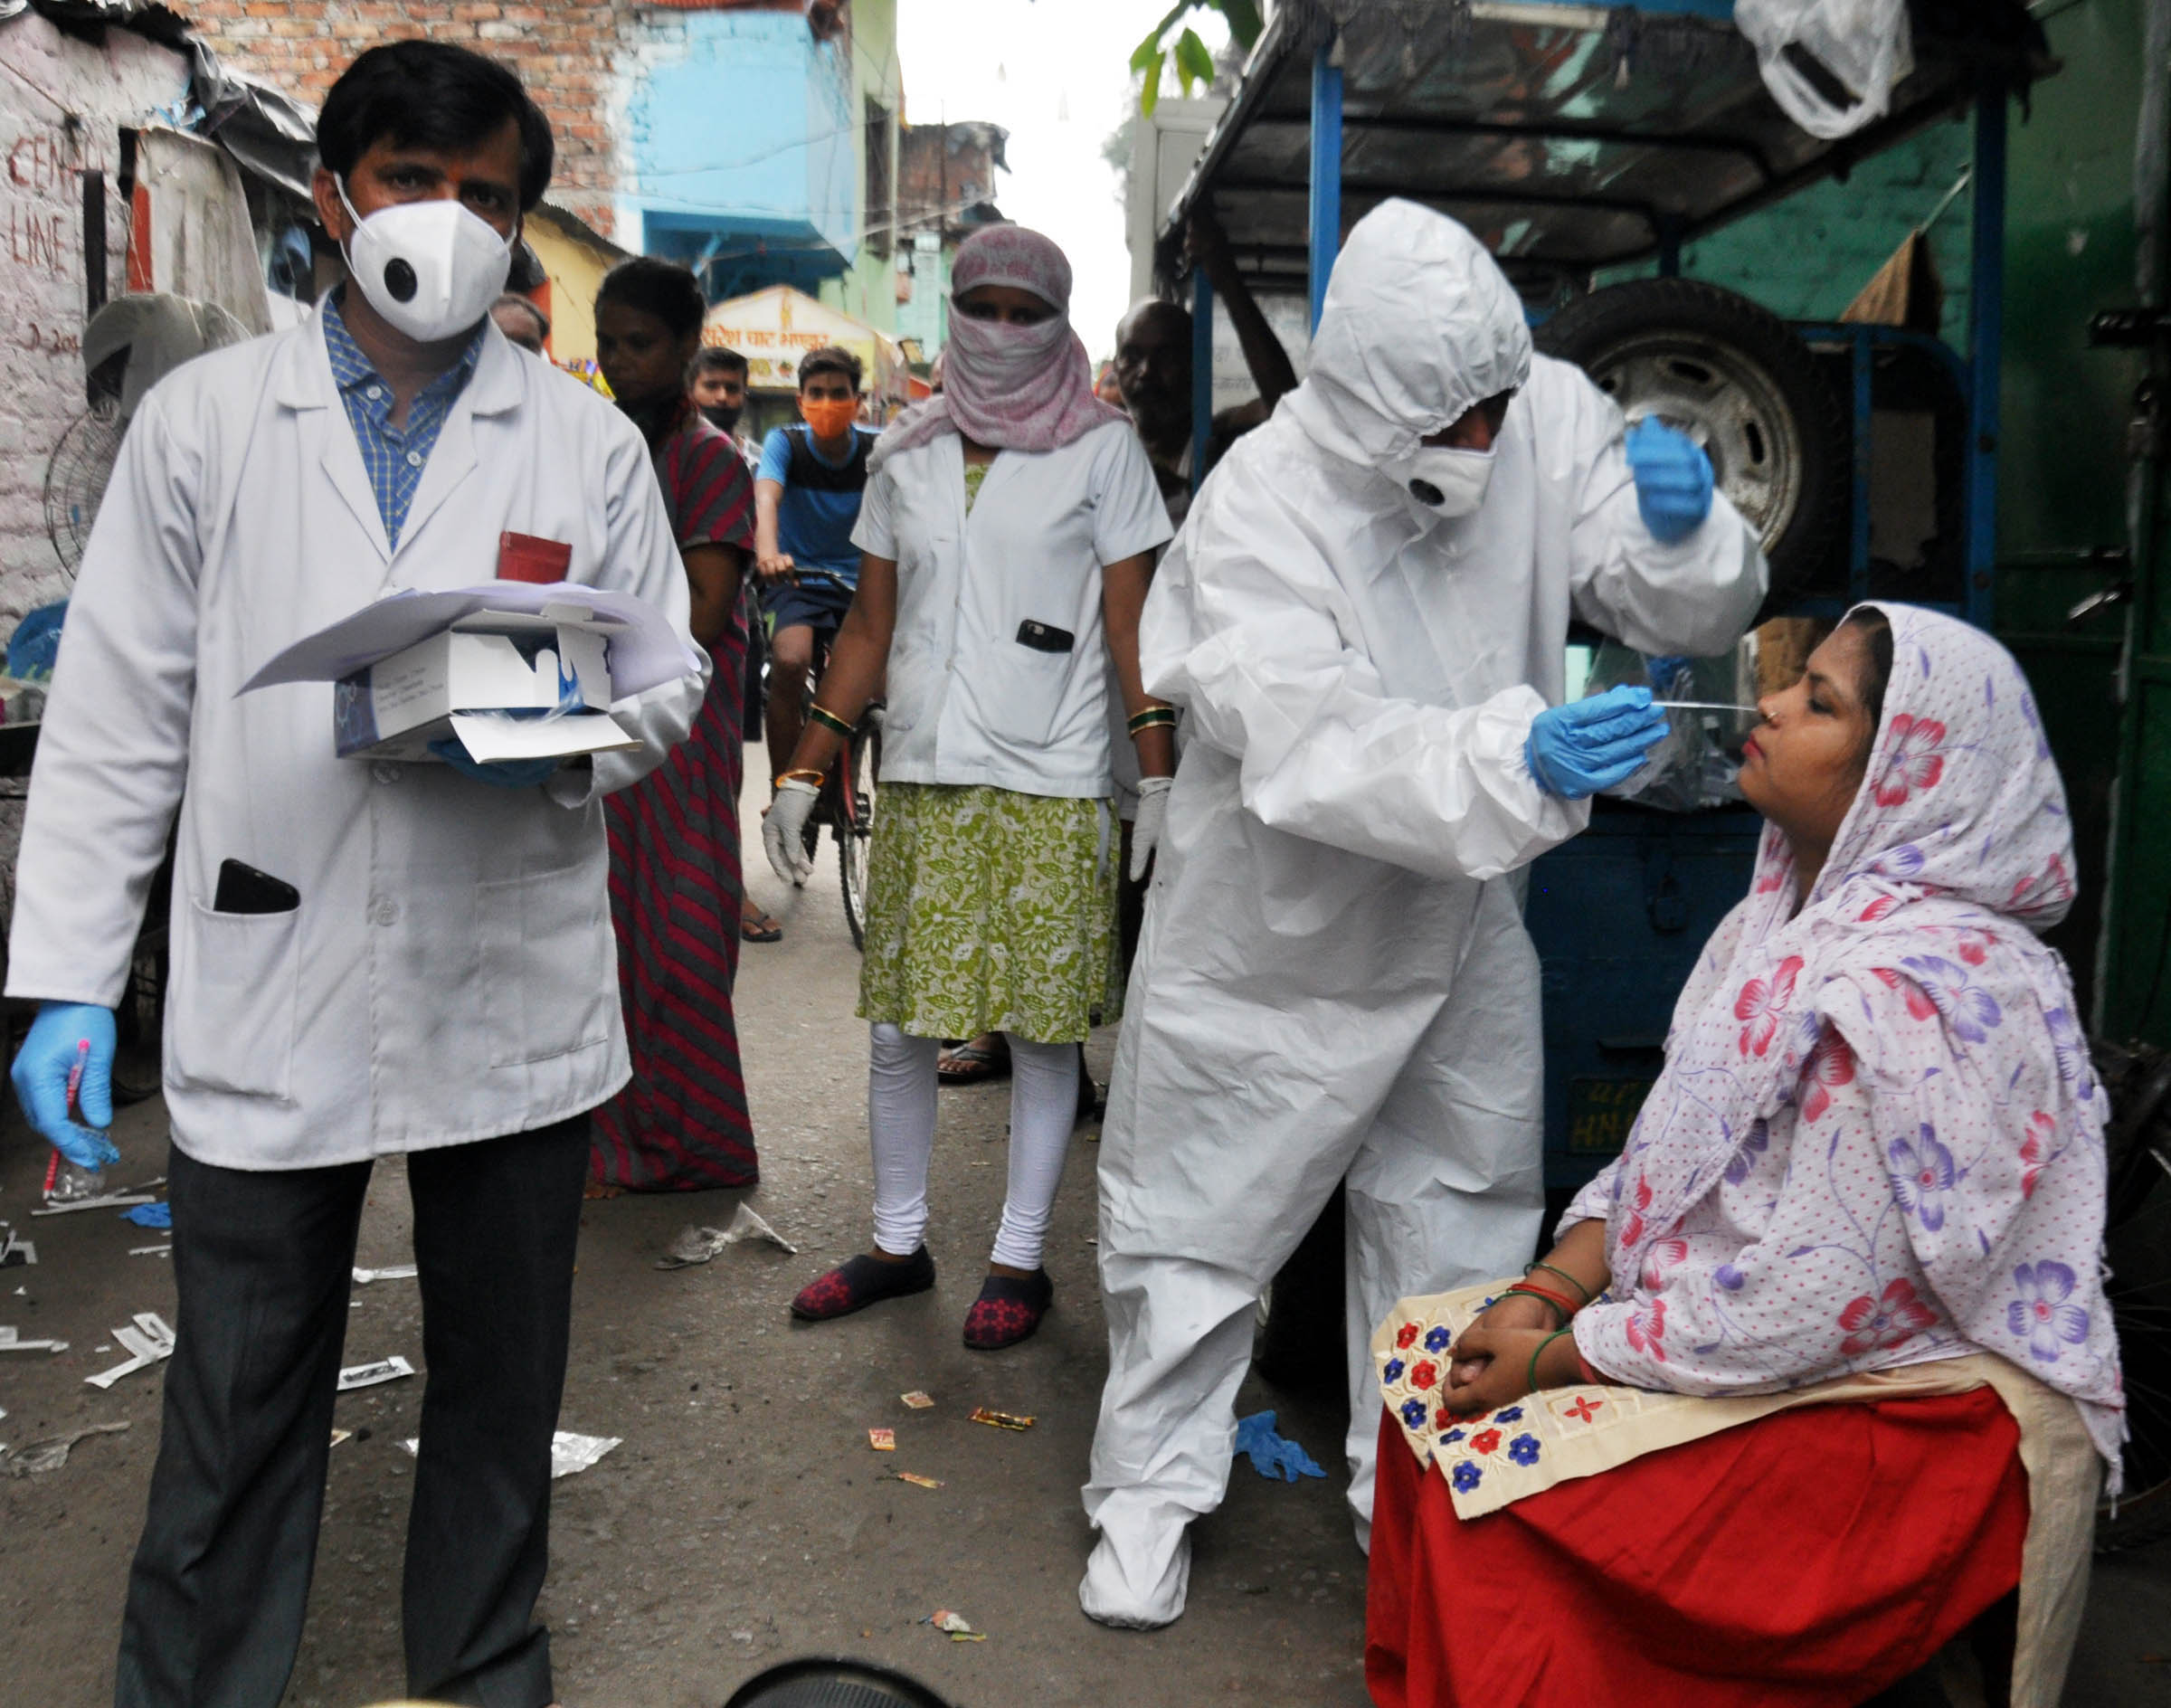 Bangladesh COVID-19 cases reach 207,000 with 2,668 deaths